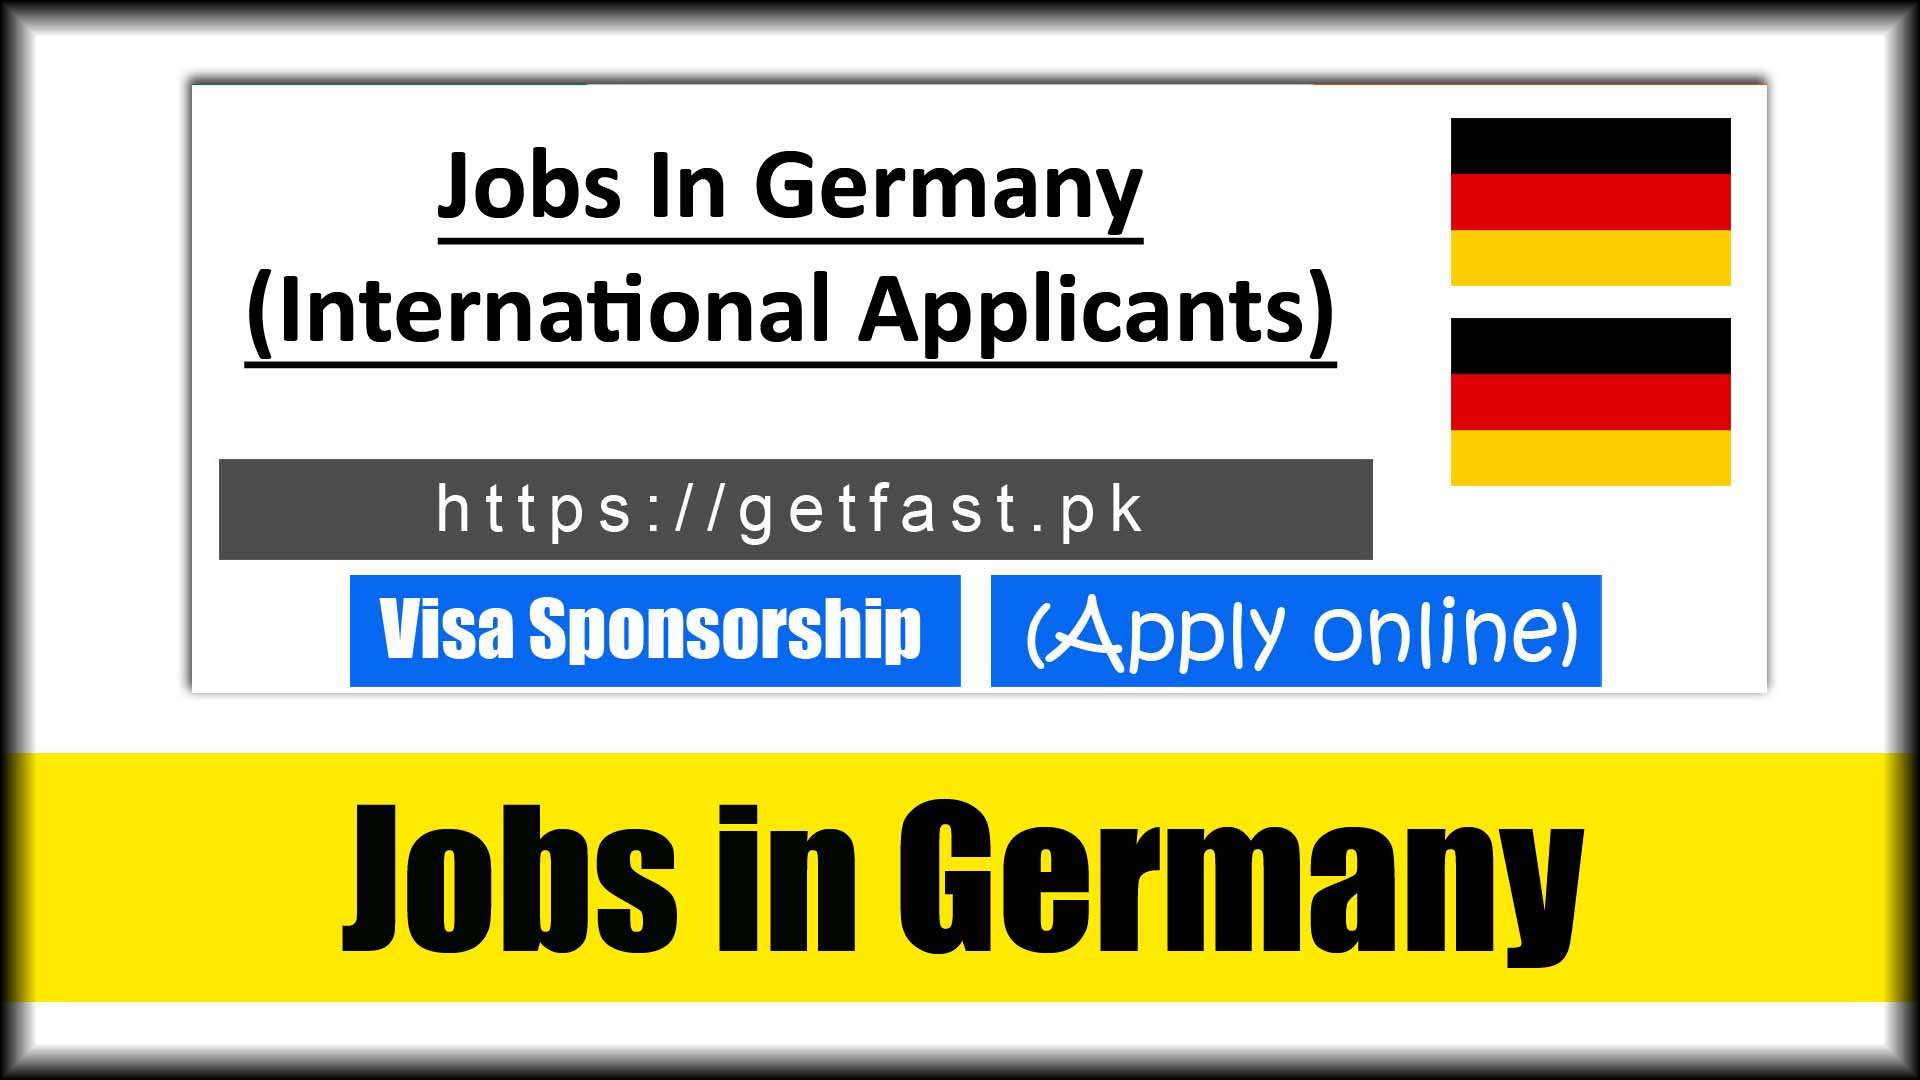 Jobs In Germany With Visa Sponsorship (International Applicants)